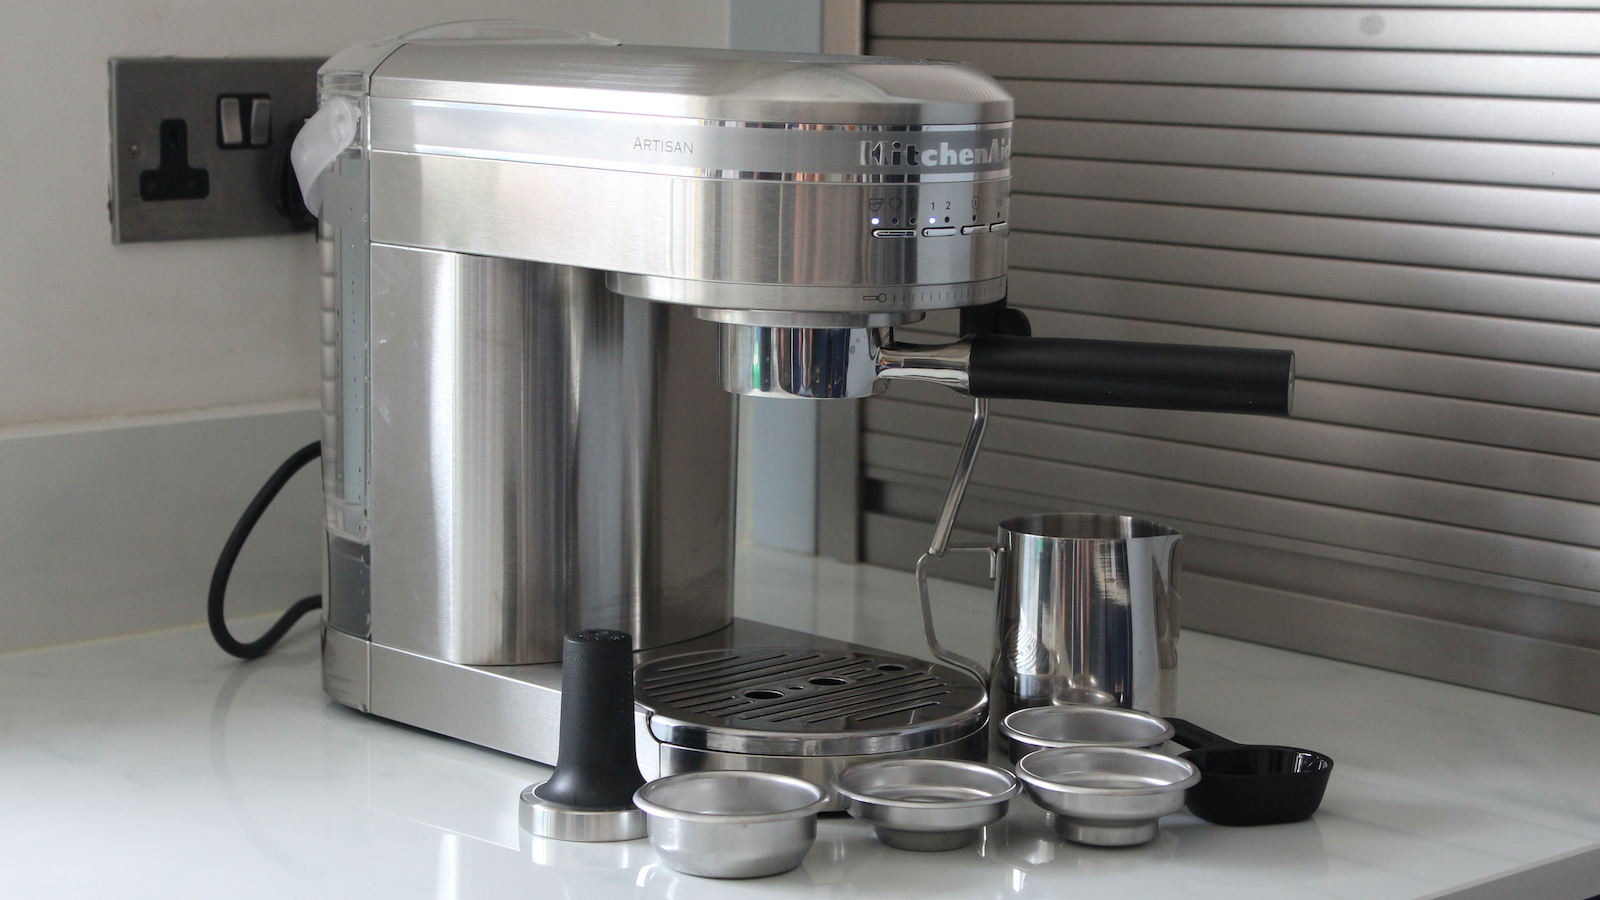  KitchenAid Artisan - Semi-automation makes for ease of use